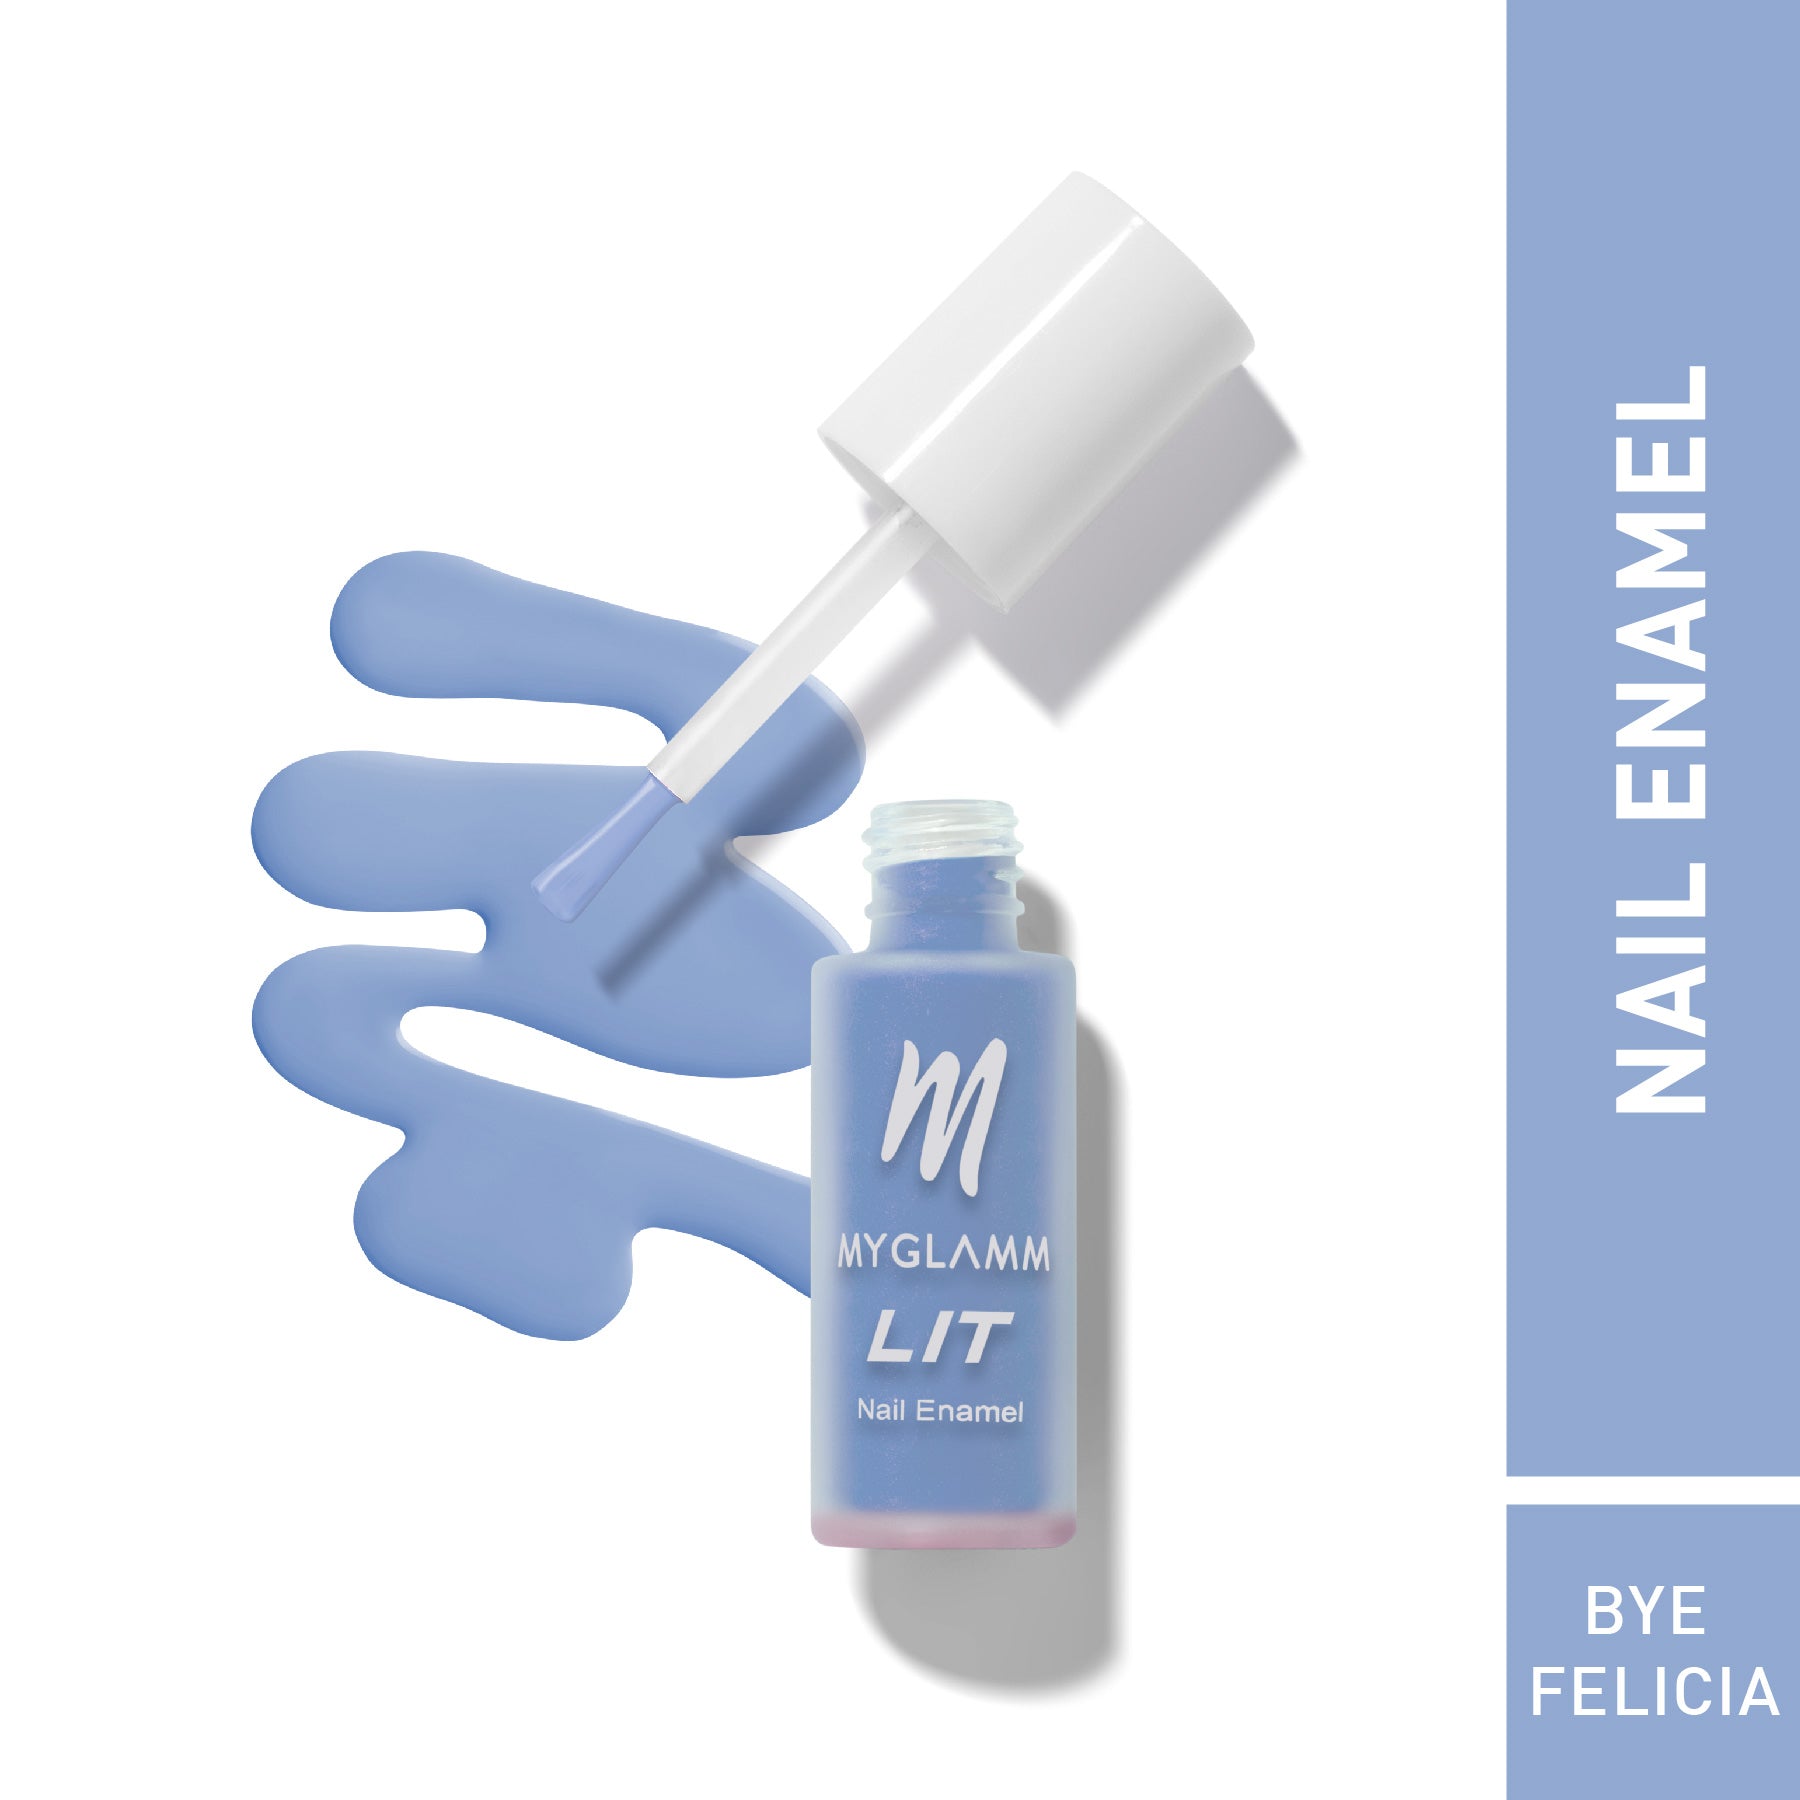 MyGlamm LIT Matte Nail Enamel-Bye Felicia-7ml